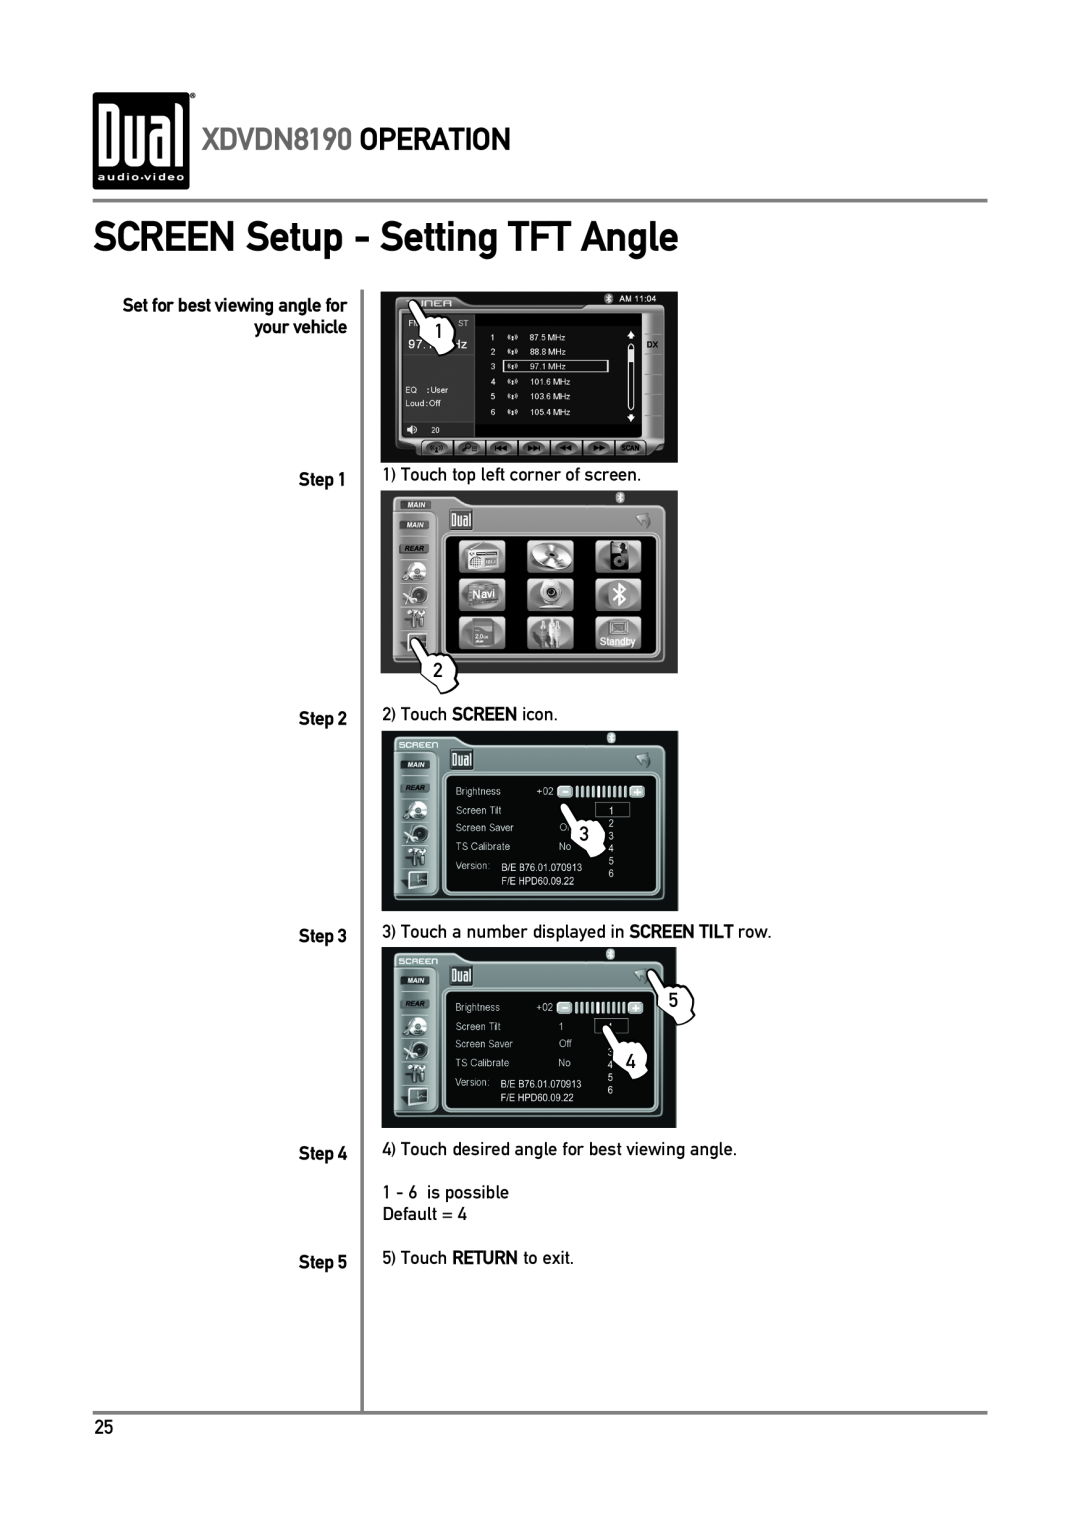 Dual owner manual SCREEN Setup - Setting TFT Angle, L5 L4, XDVDN8190 OPERATION, Step Step Step Step Step 